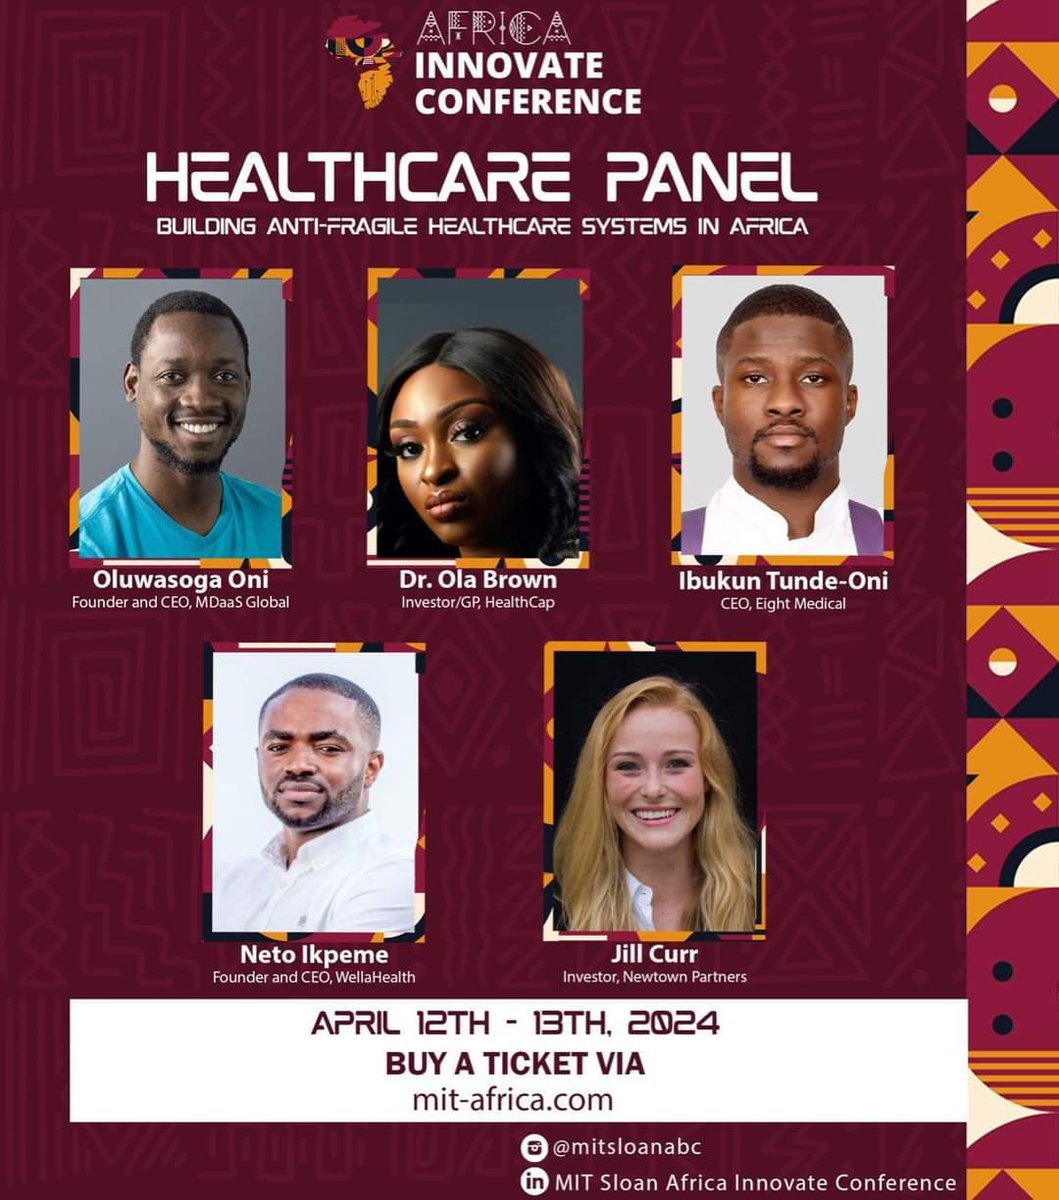 MIT Africa Innovate Conference | #MITMediaLab| April12-13. Healthcare panelists: Oni Oluwasoga (#MDaaSGlobal), Ola Brown (#HealthCapAfrica), Ibukun Tunde-Oni (#EightMedical, #TechStars), Ikpeme Neto (#Wellahealth), Jill Curr (#NewtownPartners) #MITAIC2024 eventbrite.com/e/mit-sloan-af…